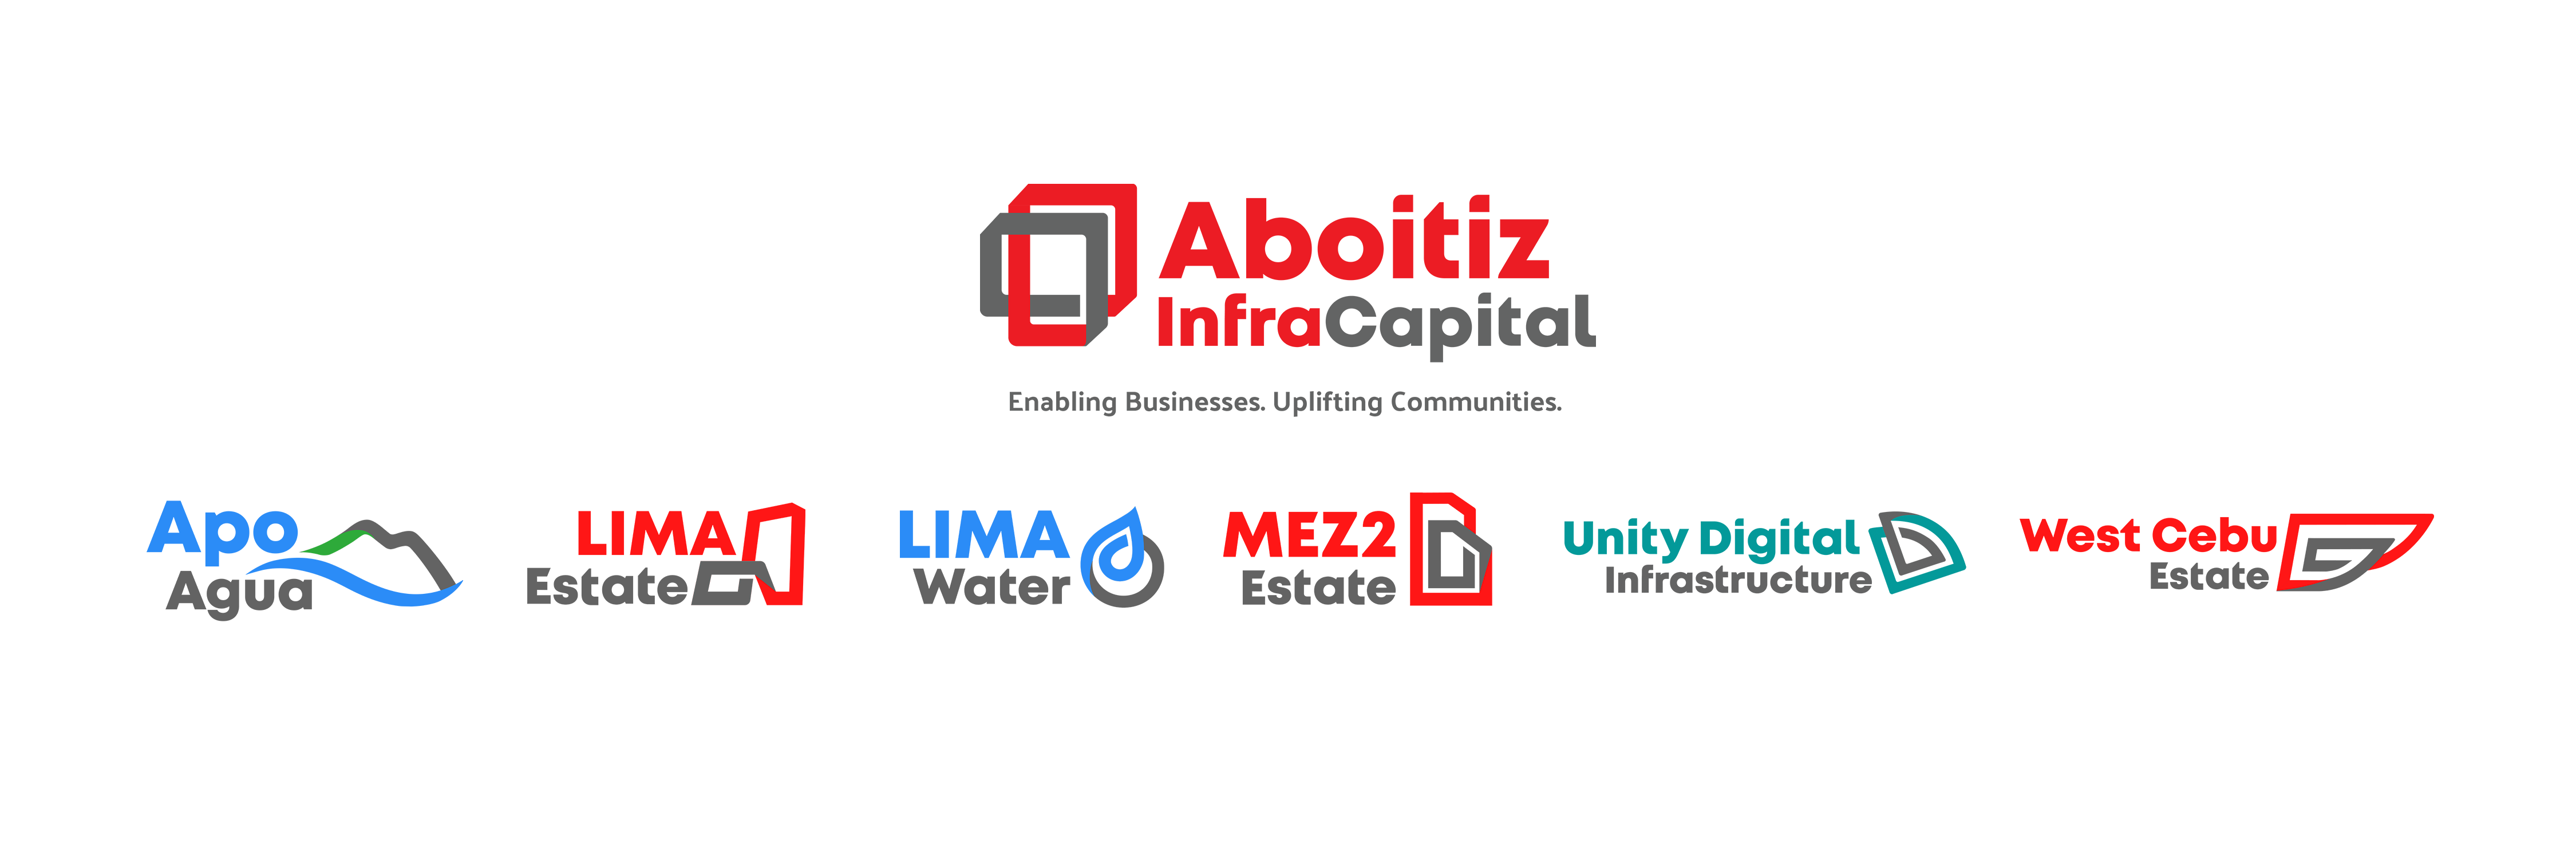 Aboitiz InfraCapital Businesses Logo